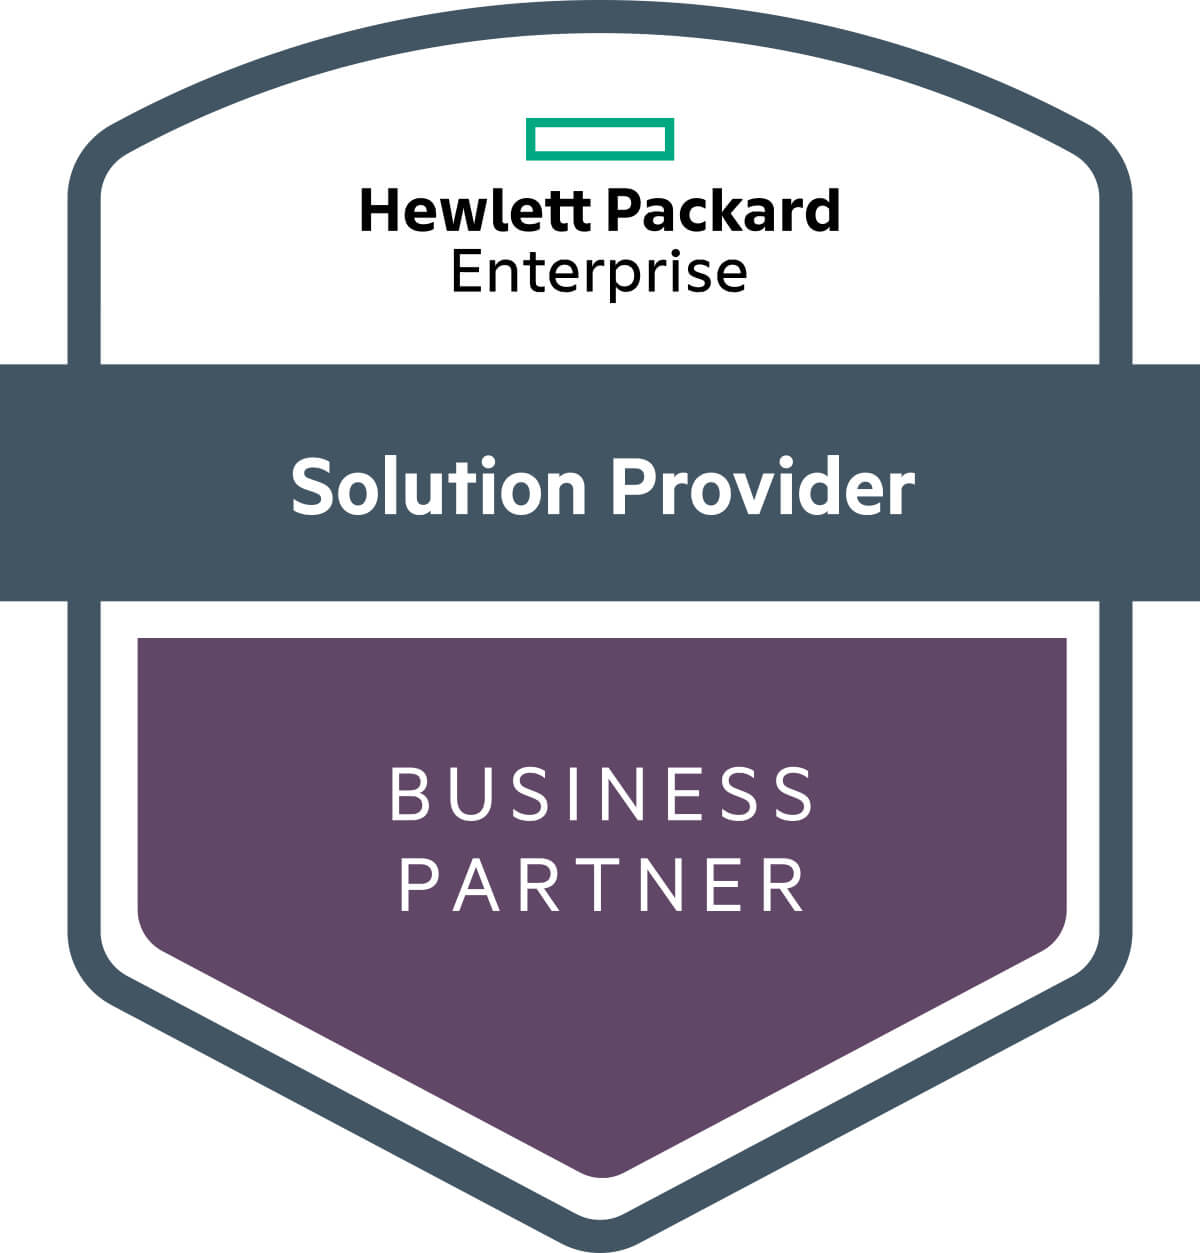 hewlett packard solutions provider business partner